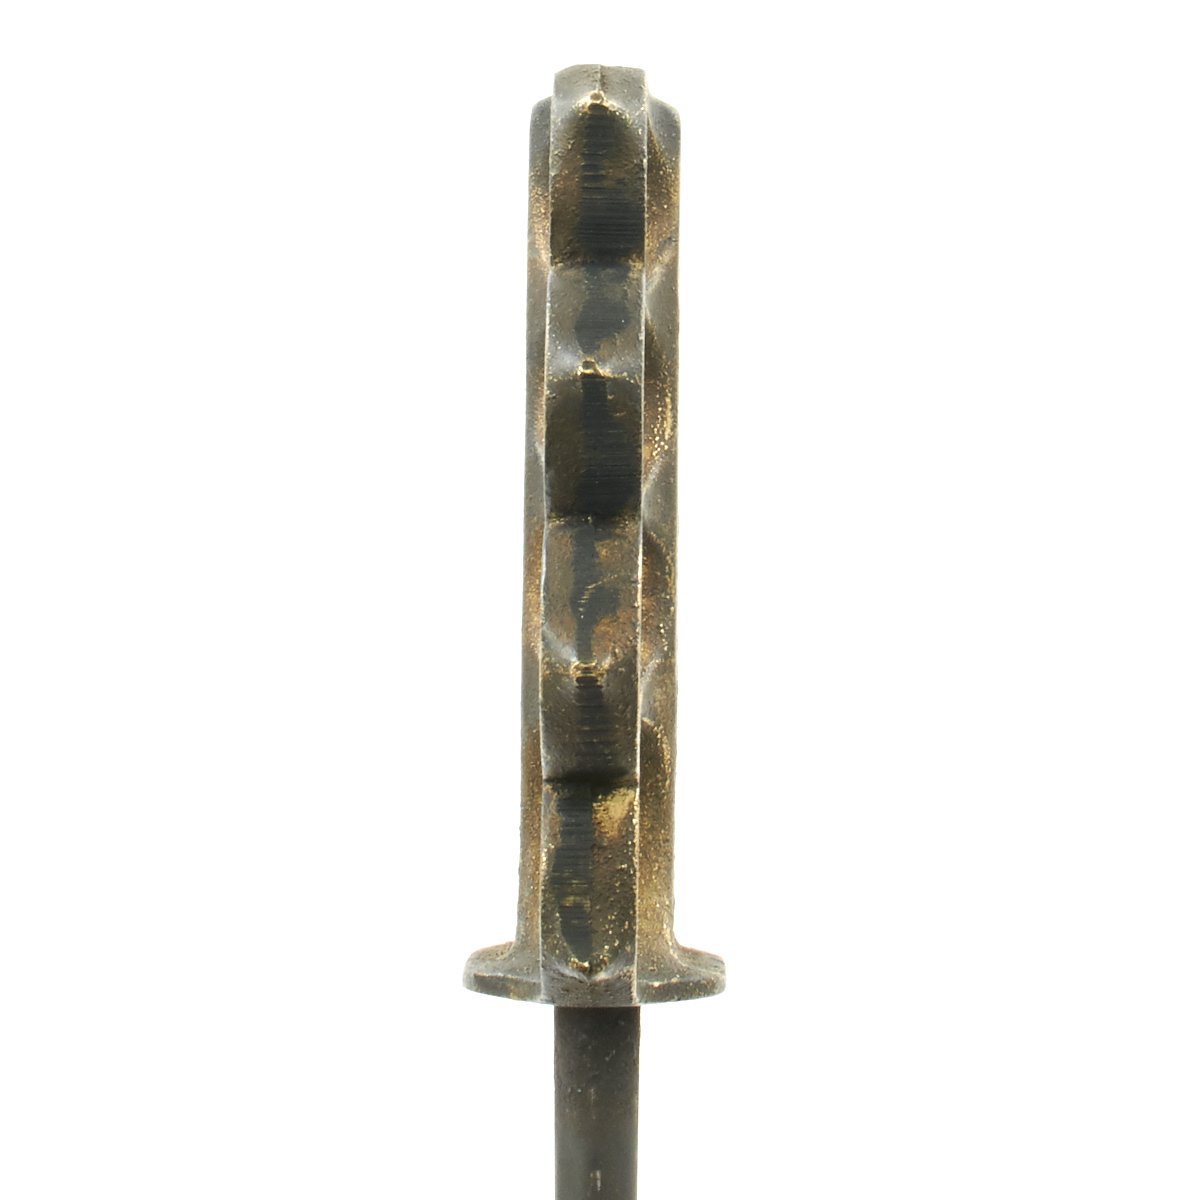 Original British WWII Custom Brass Knuckle Duster Trench Spike